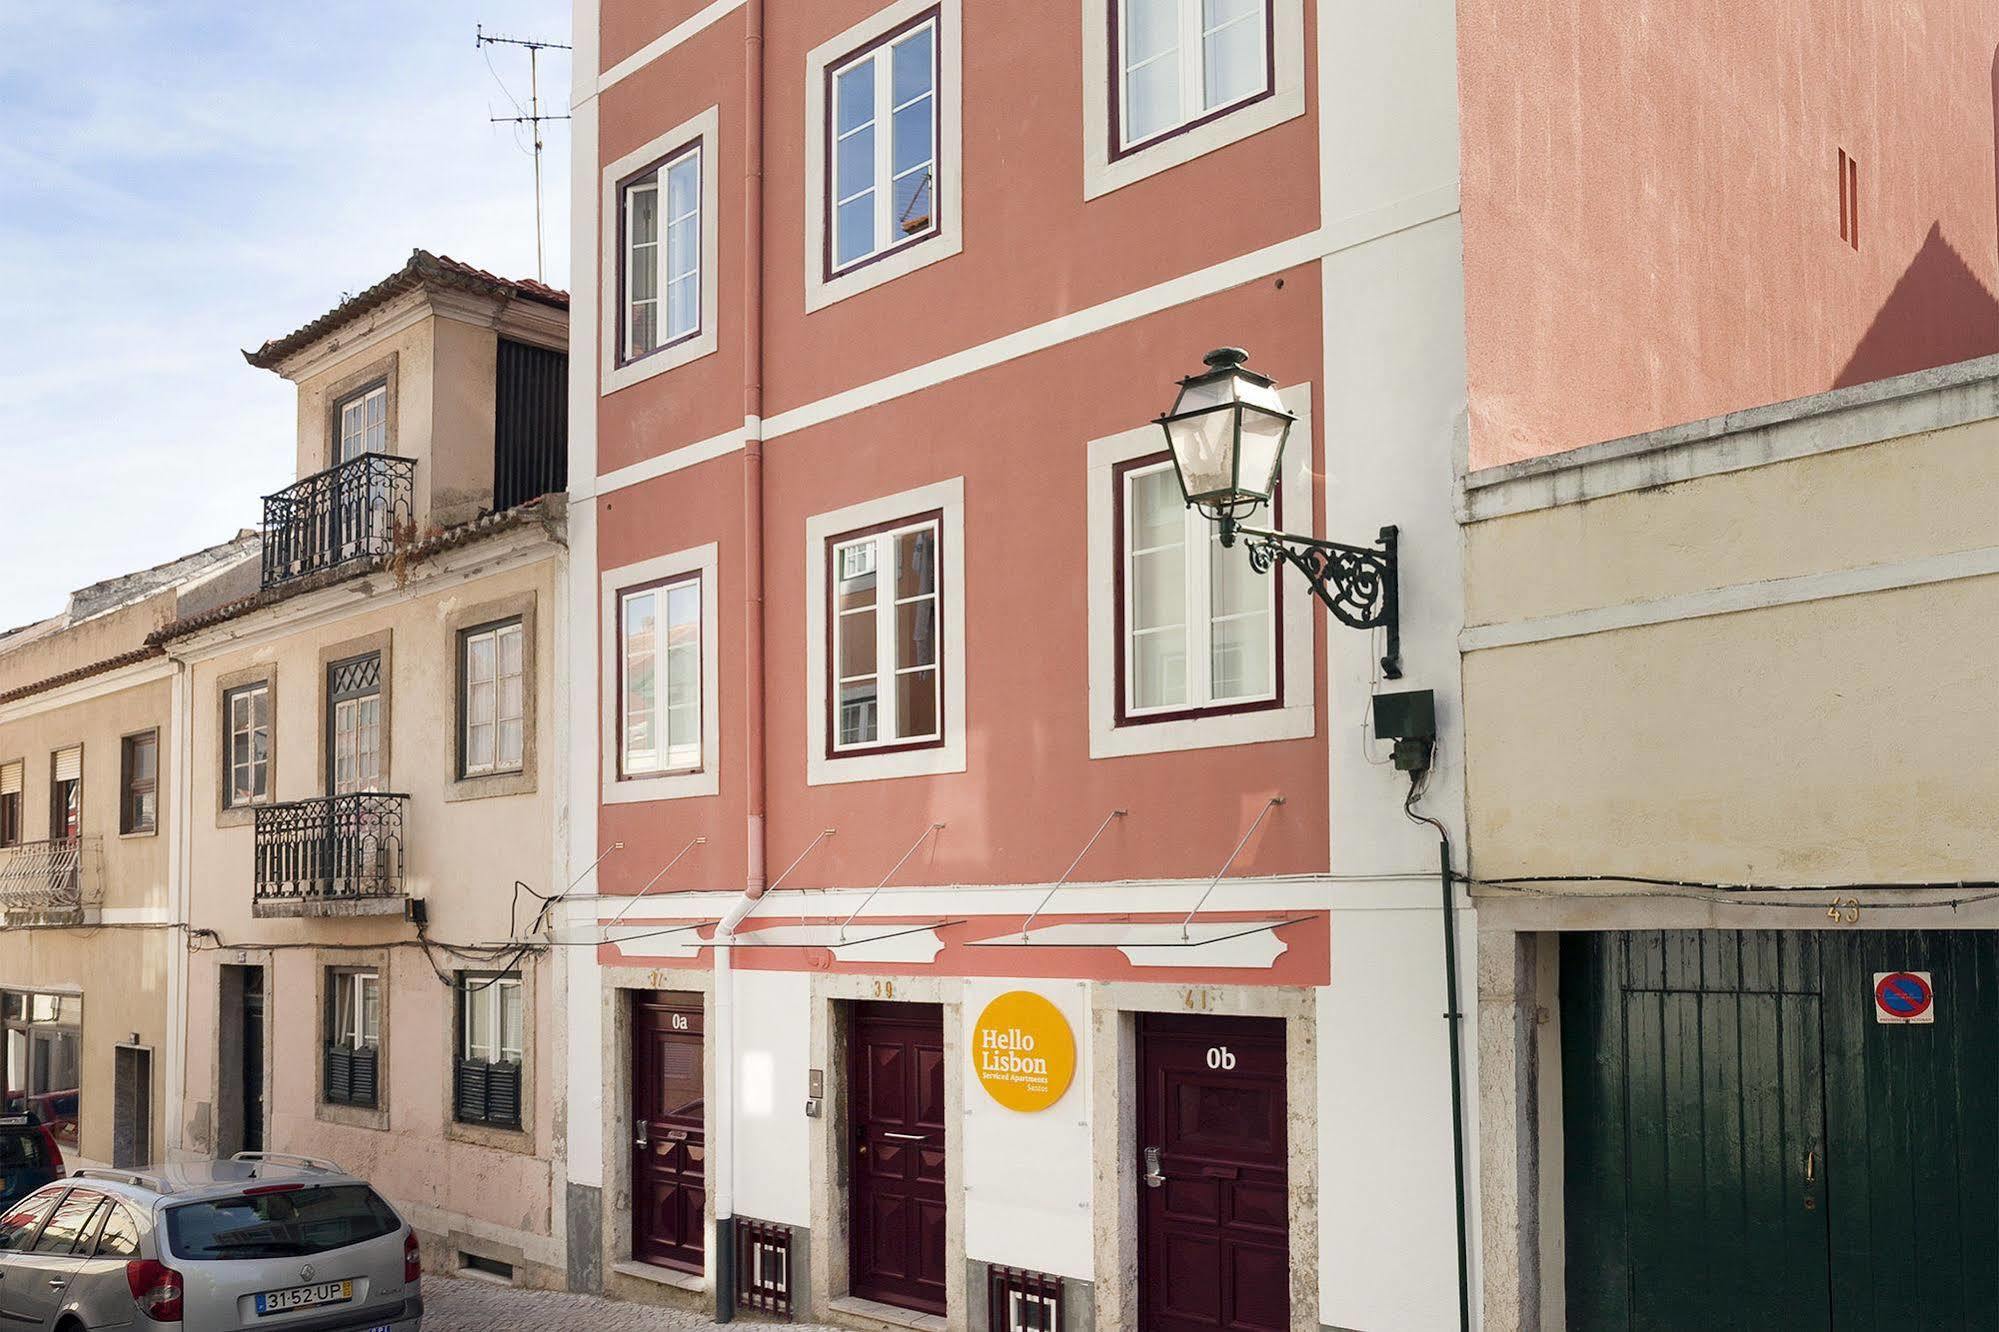 Hello Lisbon Santos Apartments Exterior photo